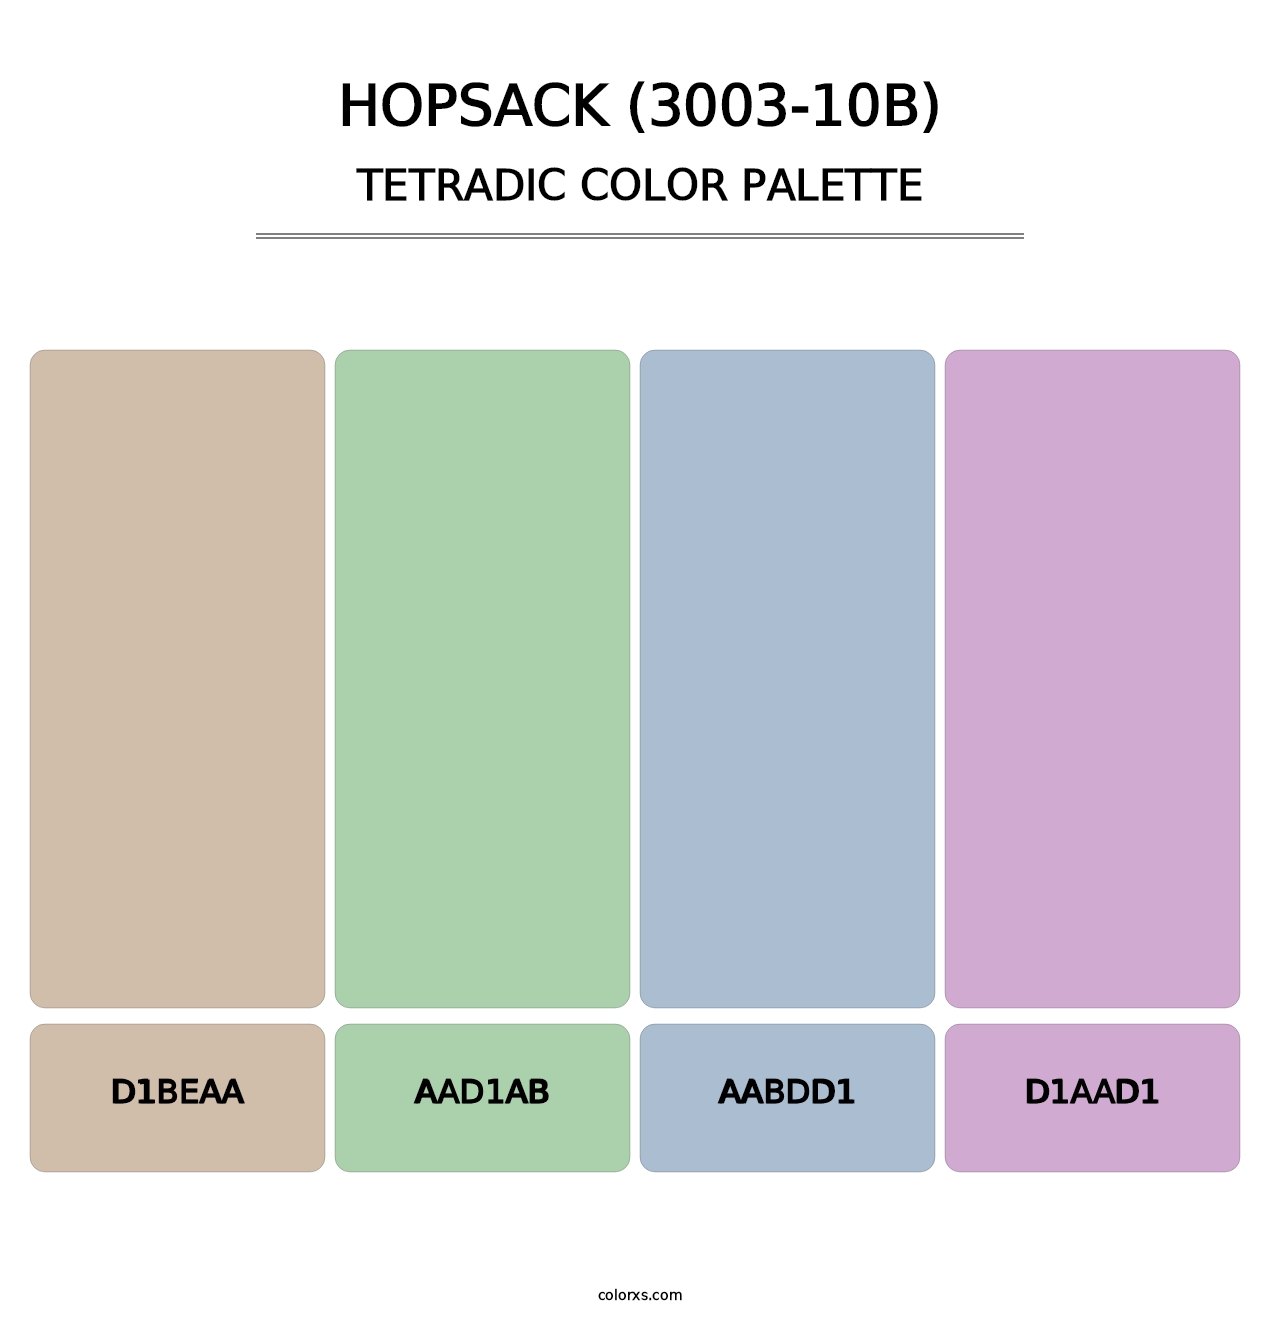 Hopsack (3003-10B) - Tetradic Color Palette